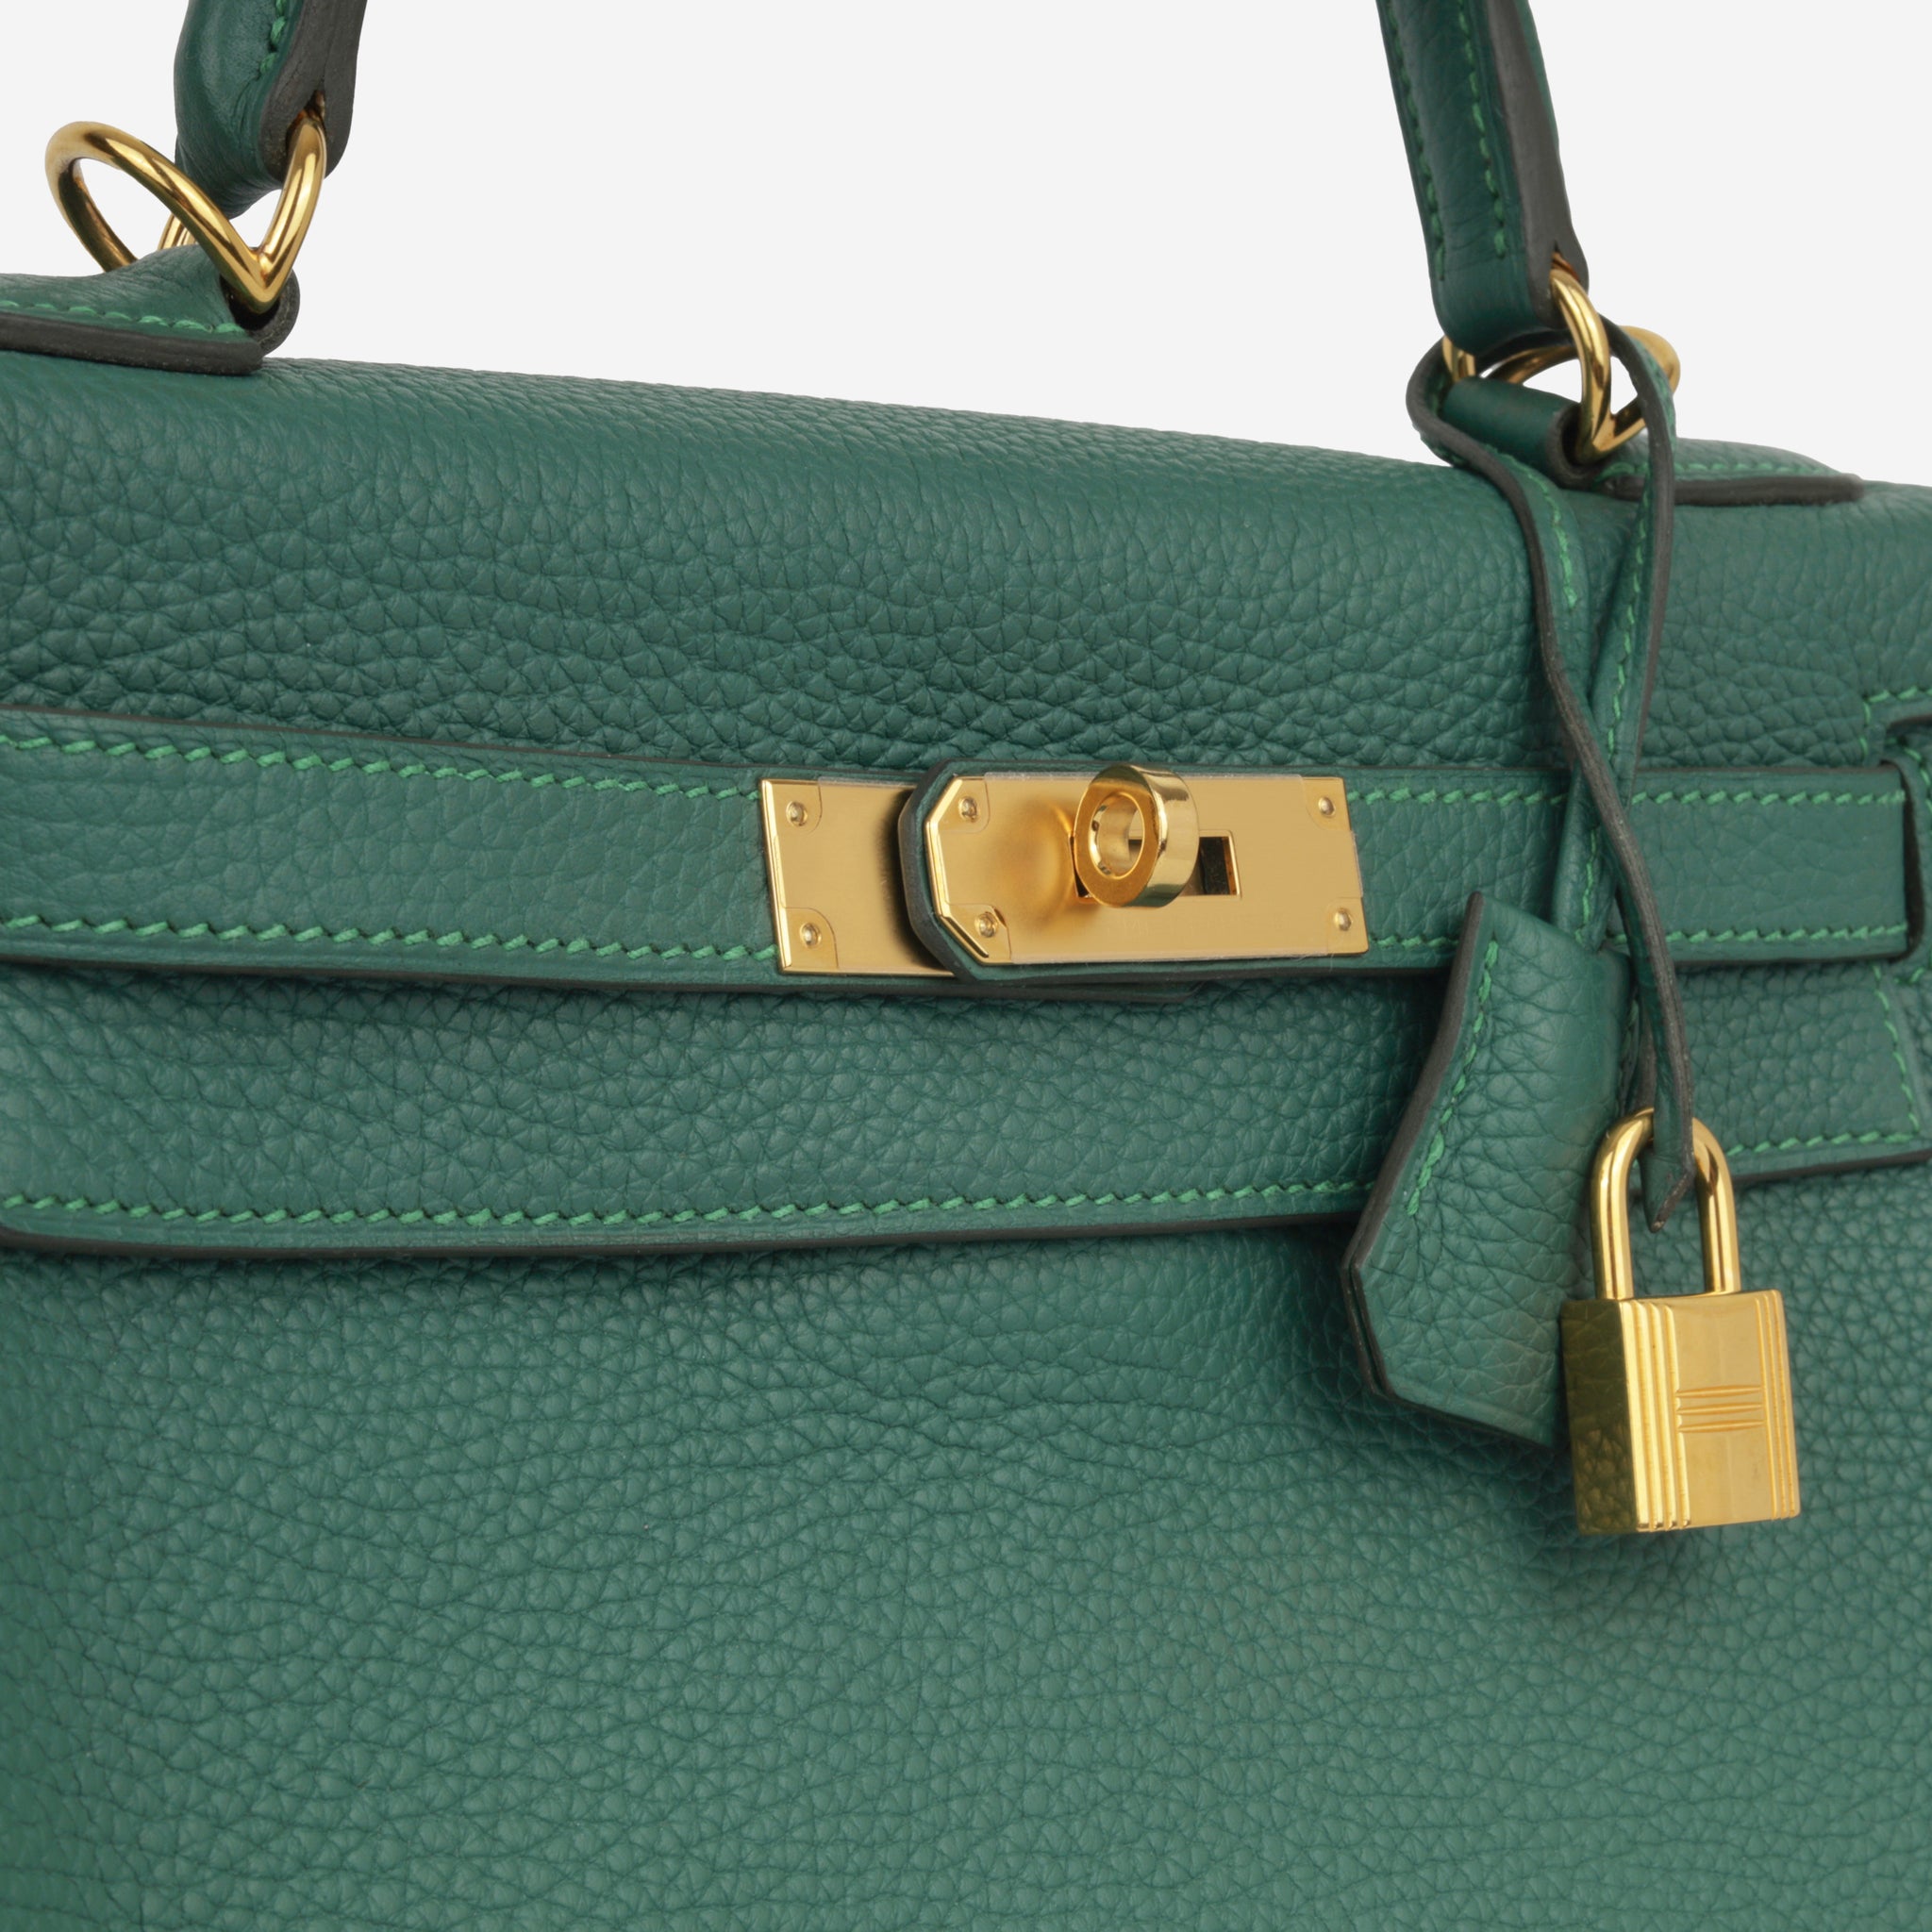 Hermes Kelly bag in Malachite Green